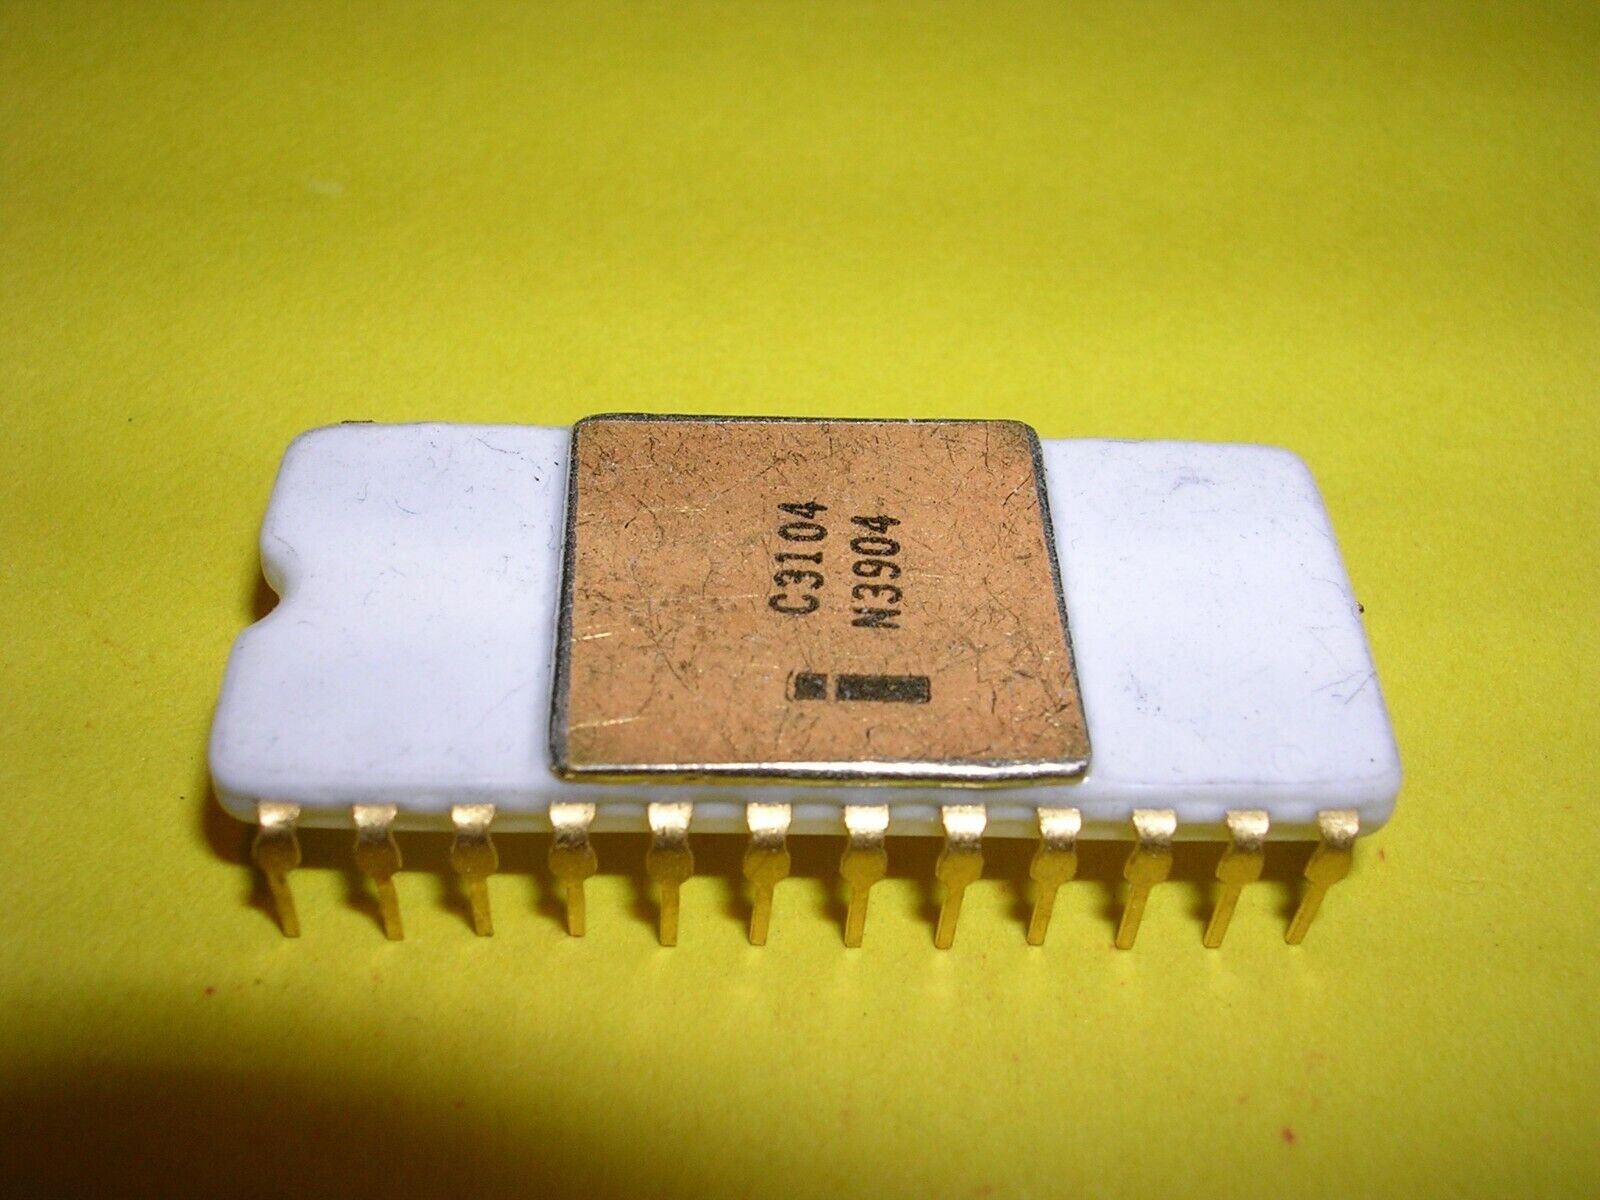 Intel C3104 RAM Chip (Type 1), Very Early Variety, Very Rare